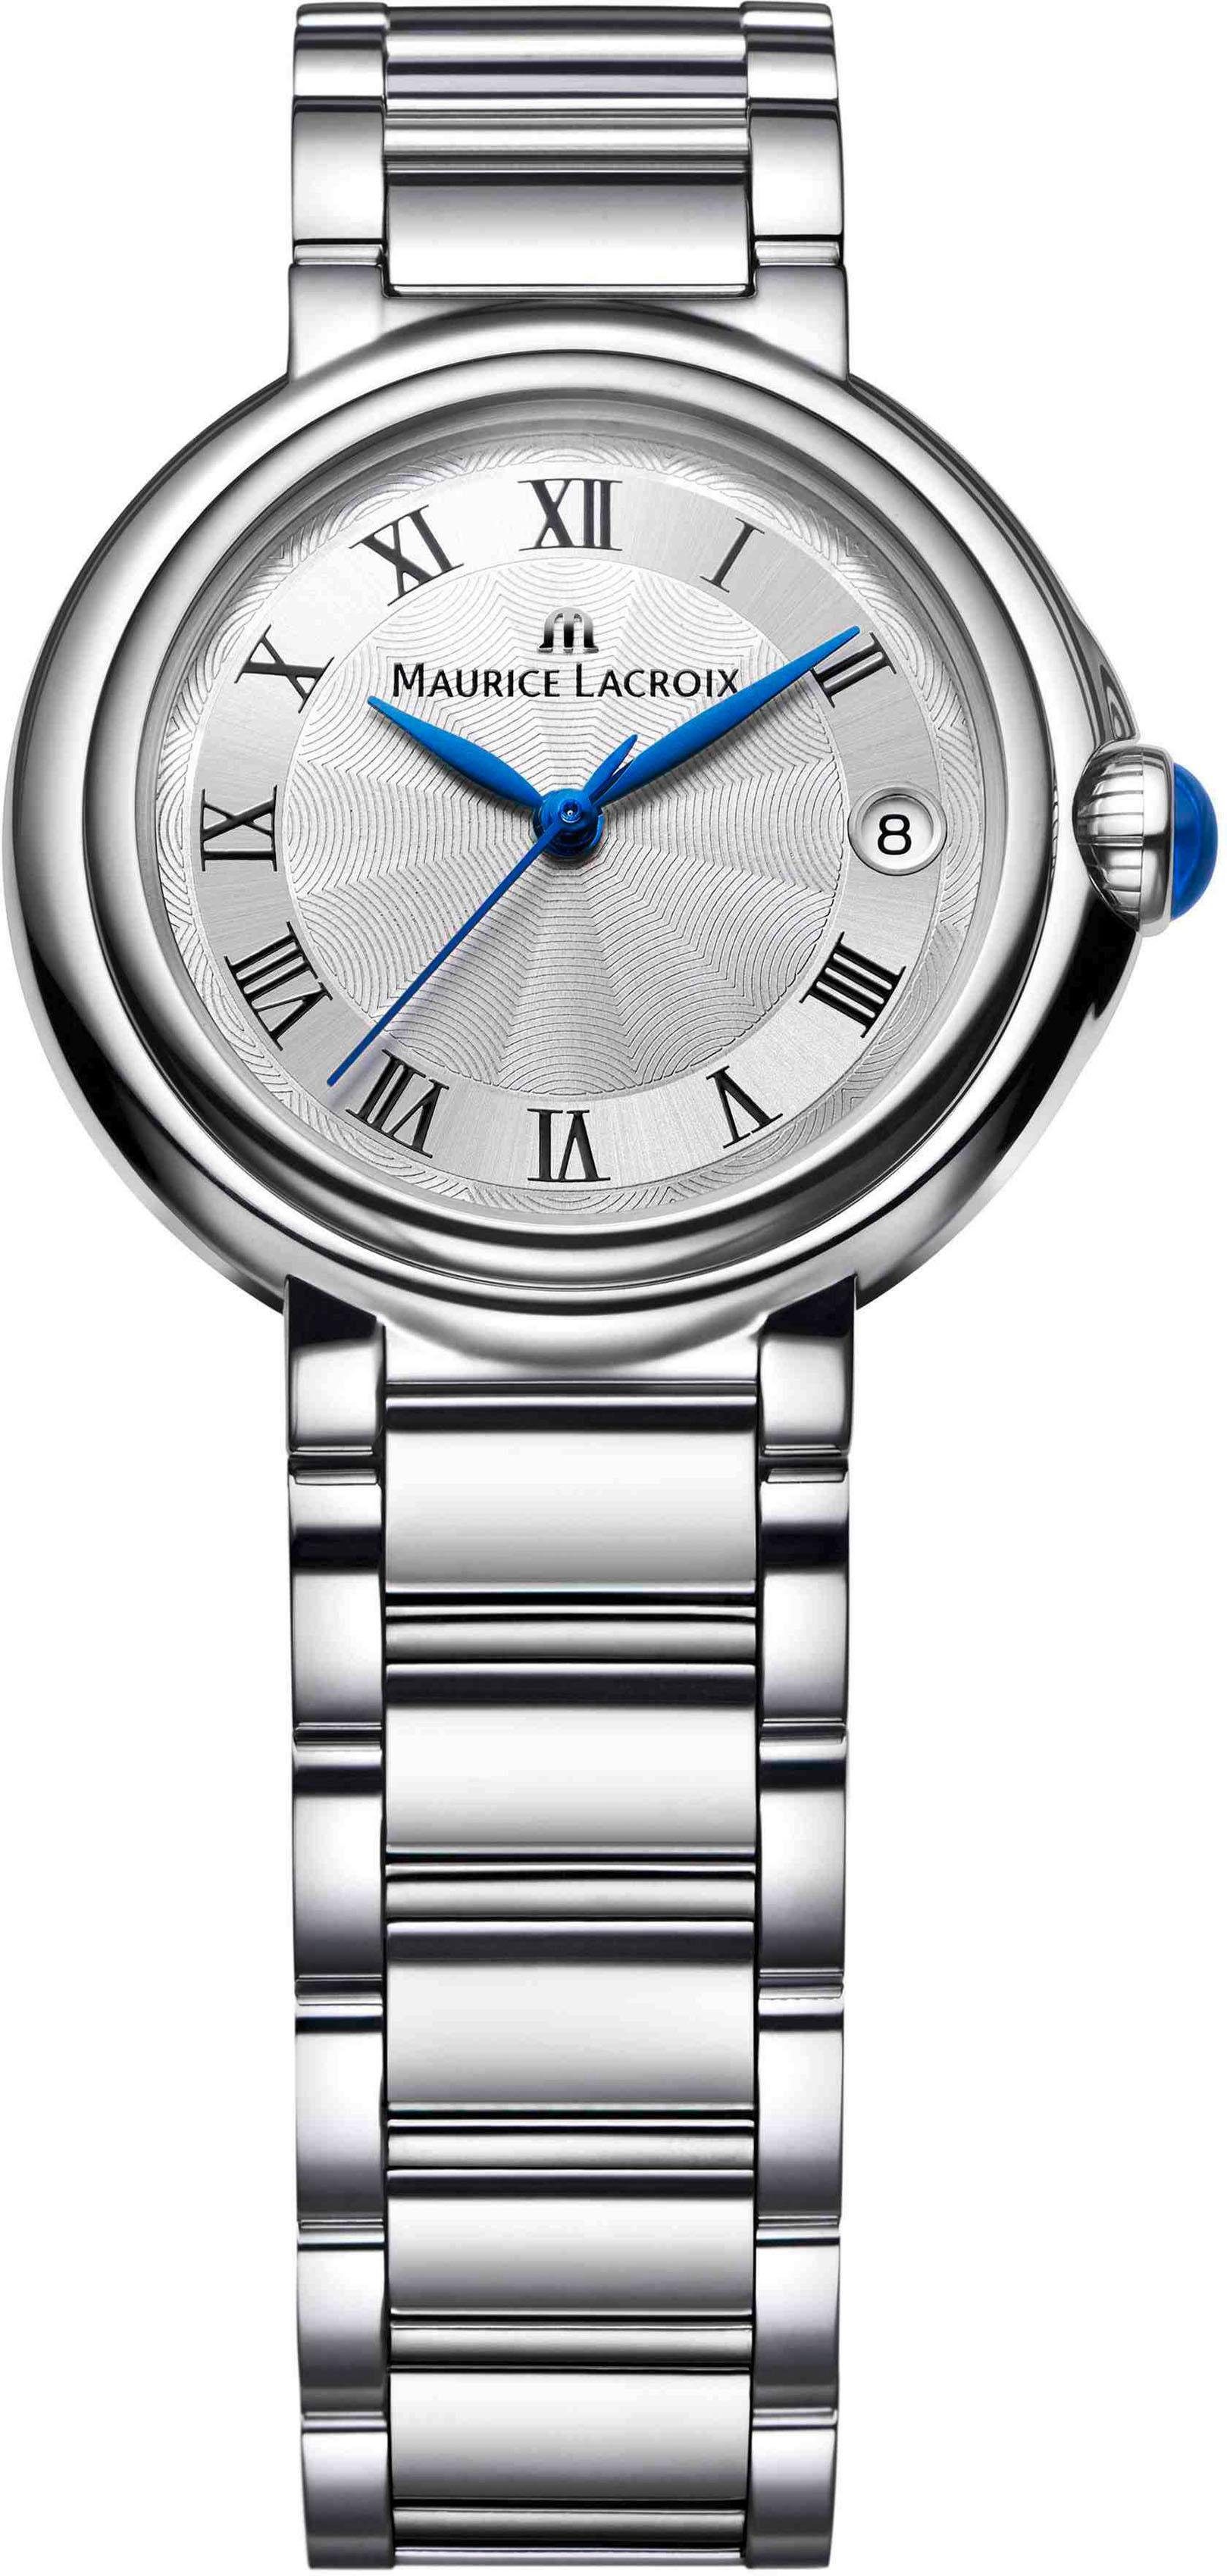 MAURICE LACROIX Schweizer Uhr FIABA, FA1004-SS002-110-1